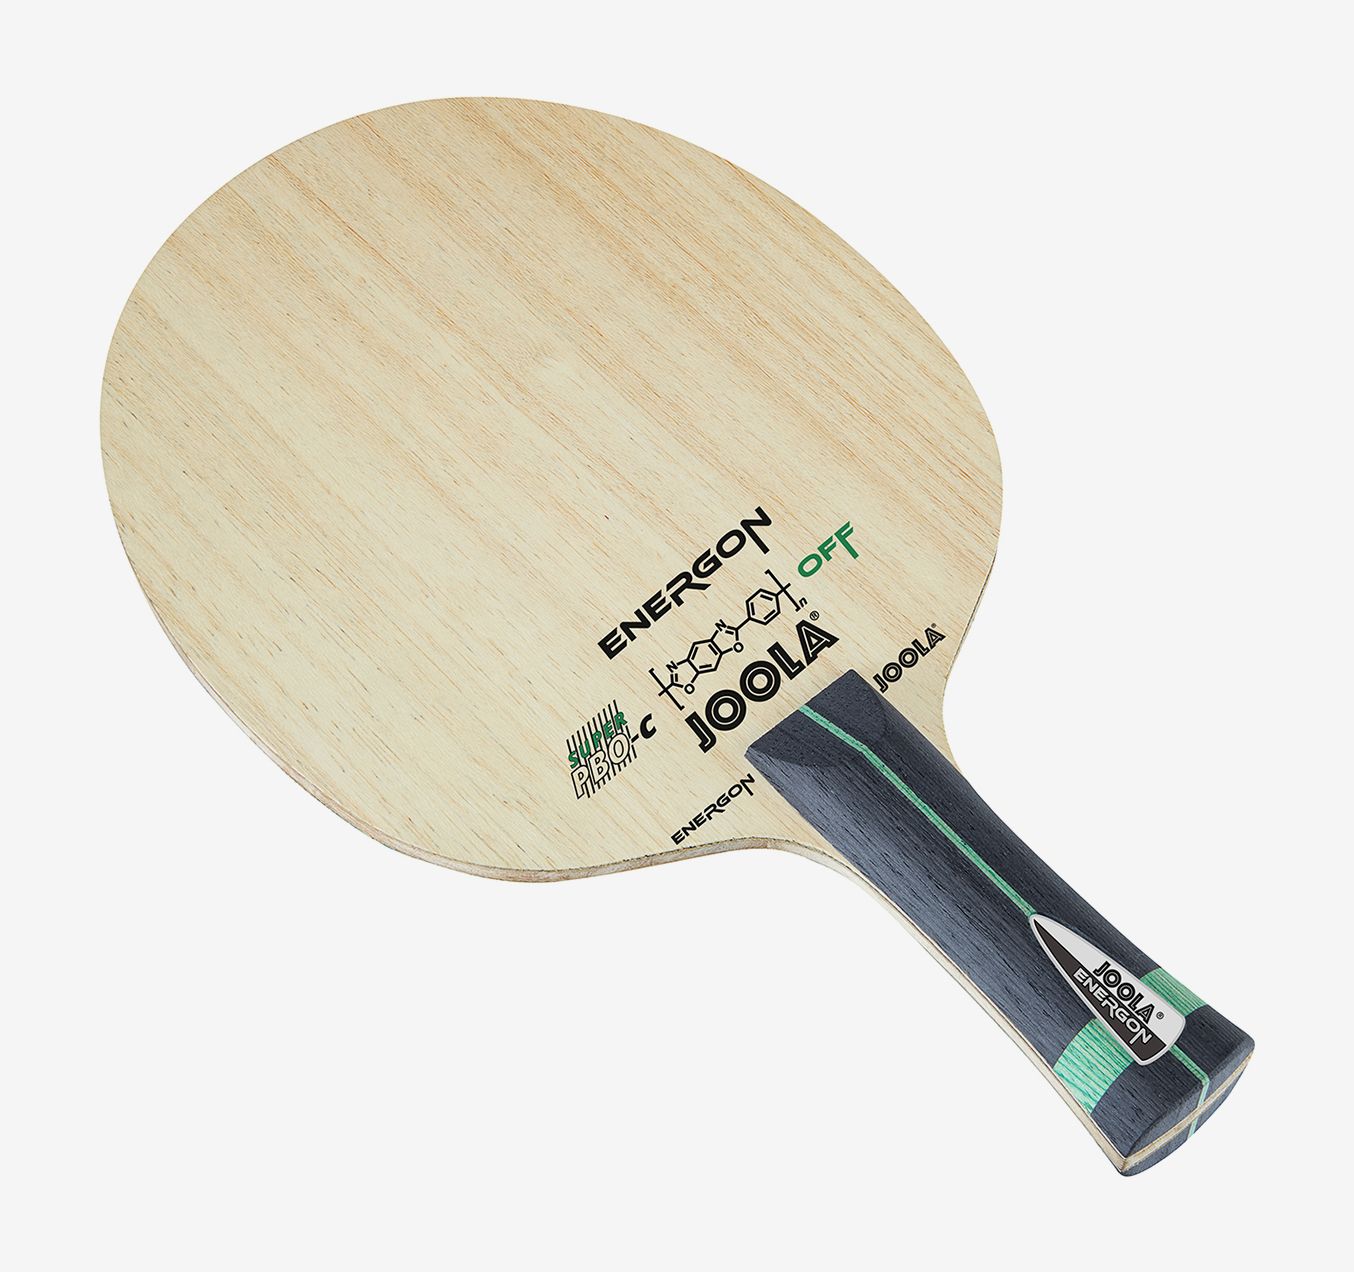 NEW BOER Pro Carbon Premium Ping Pong Table Tennis Paddle Racket Tournament 2020 